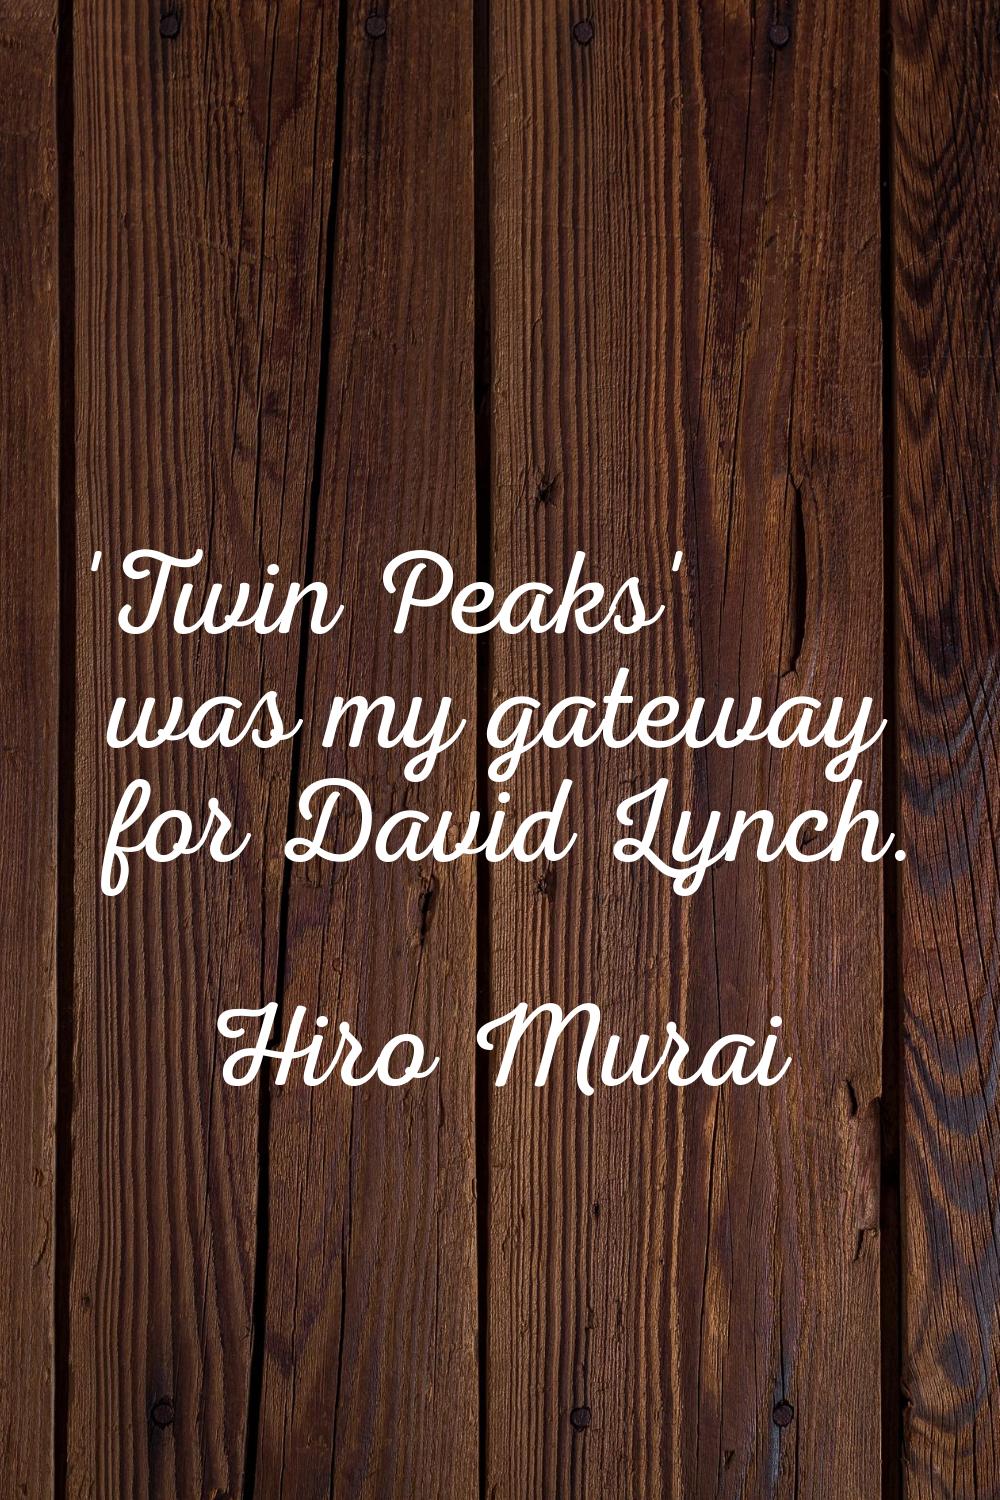 'Twin Peaks' was my gateway for David Lynch.